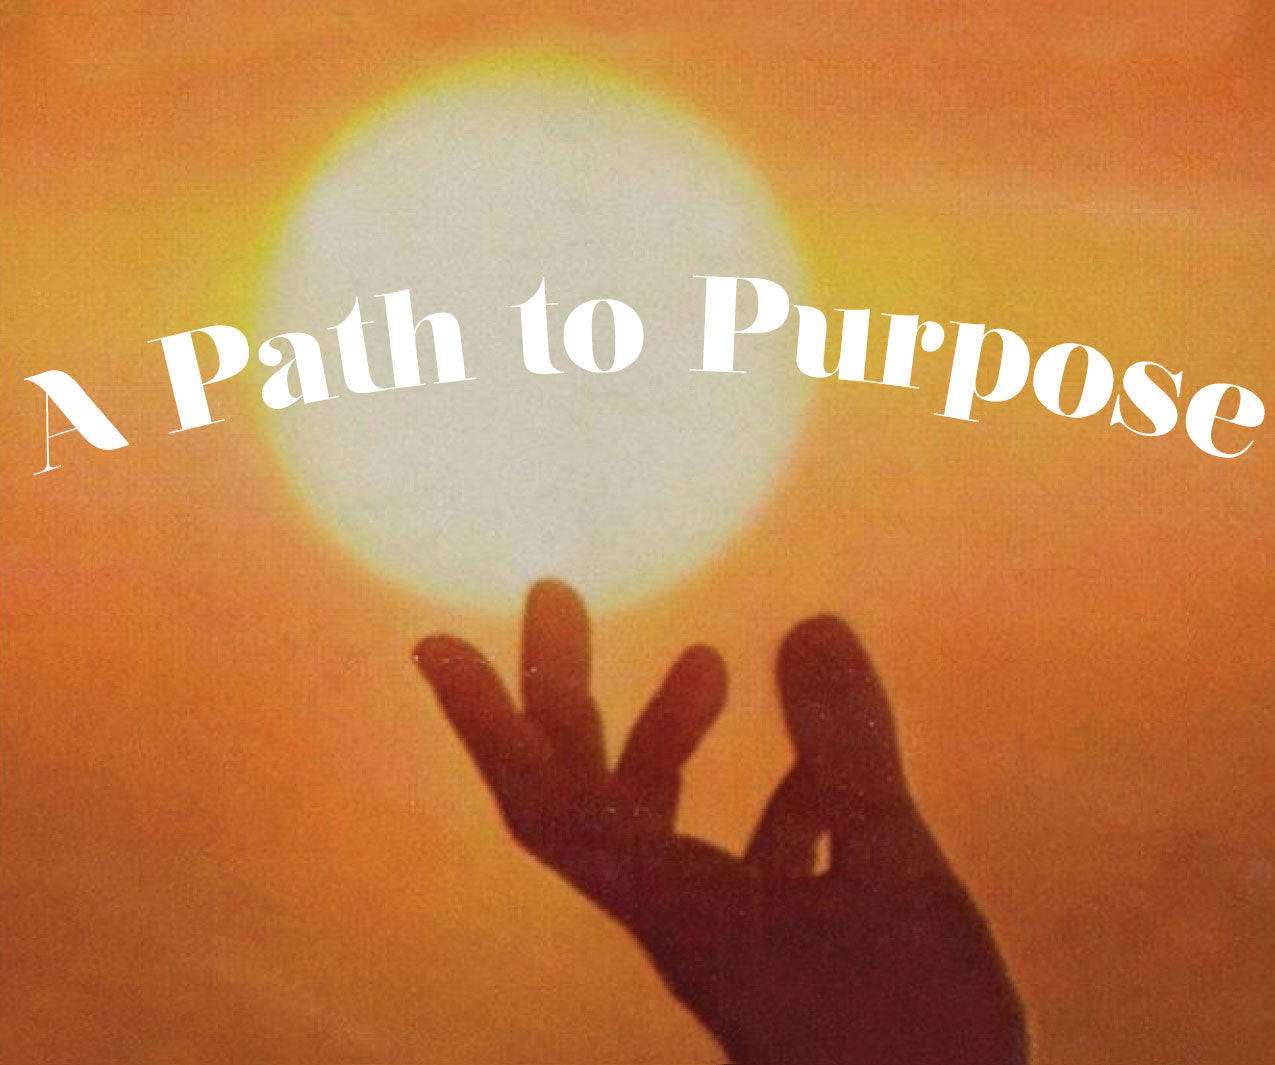 A path to purpose